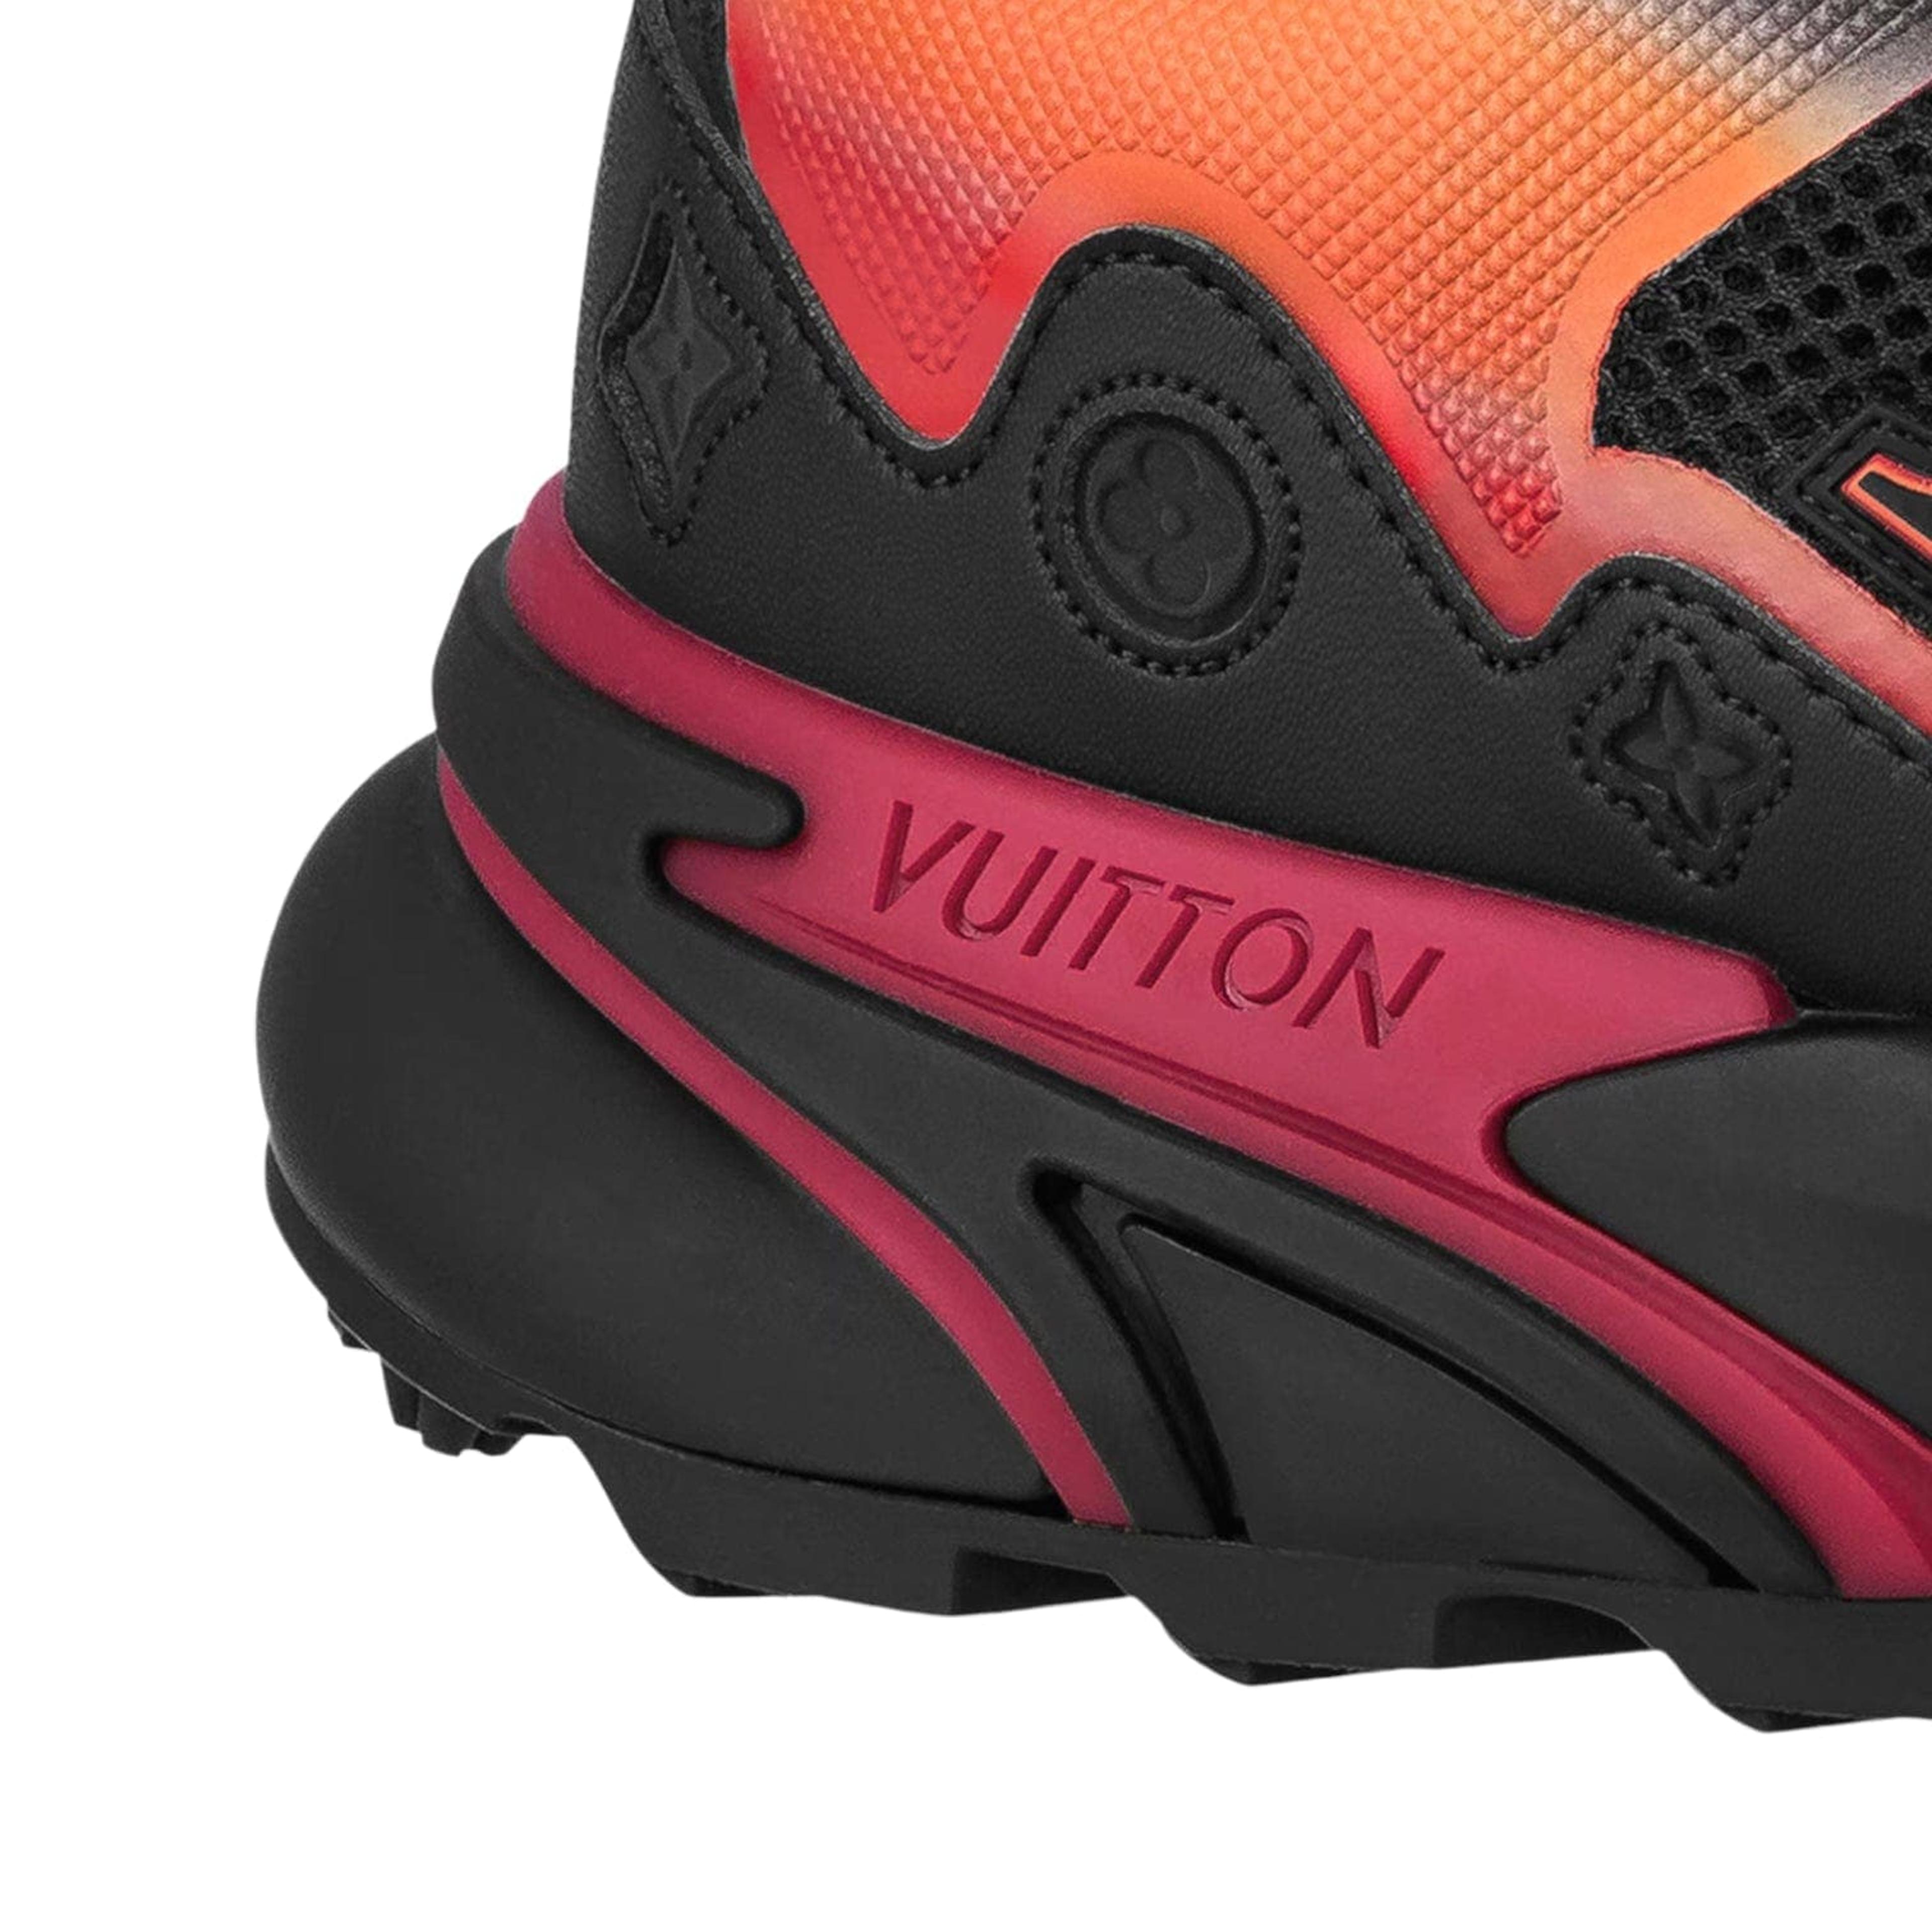 Alternate View 4 of Louis Vuitton Runner Tatic Sneaker Black Red